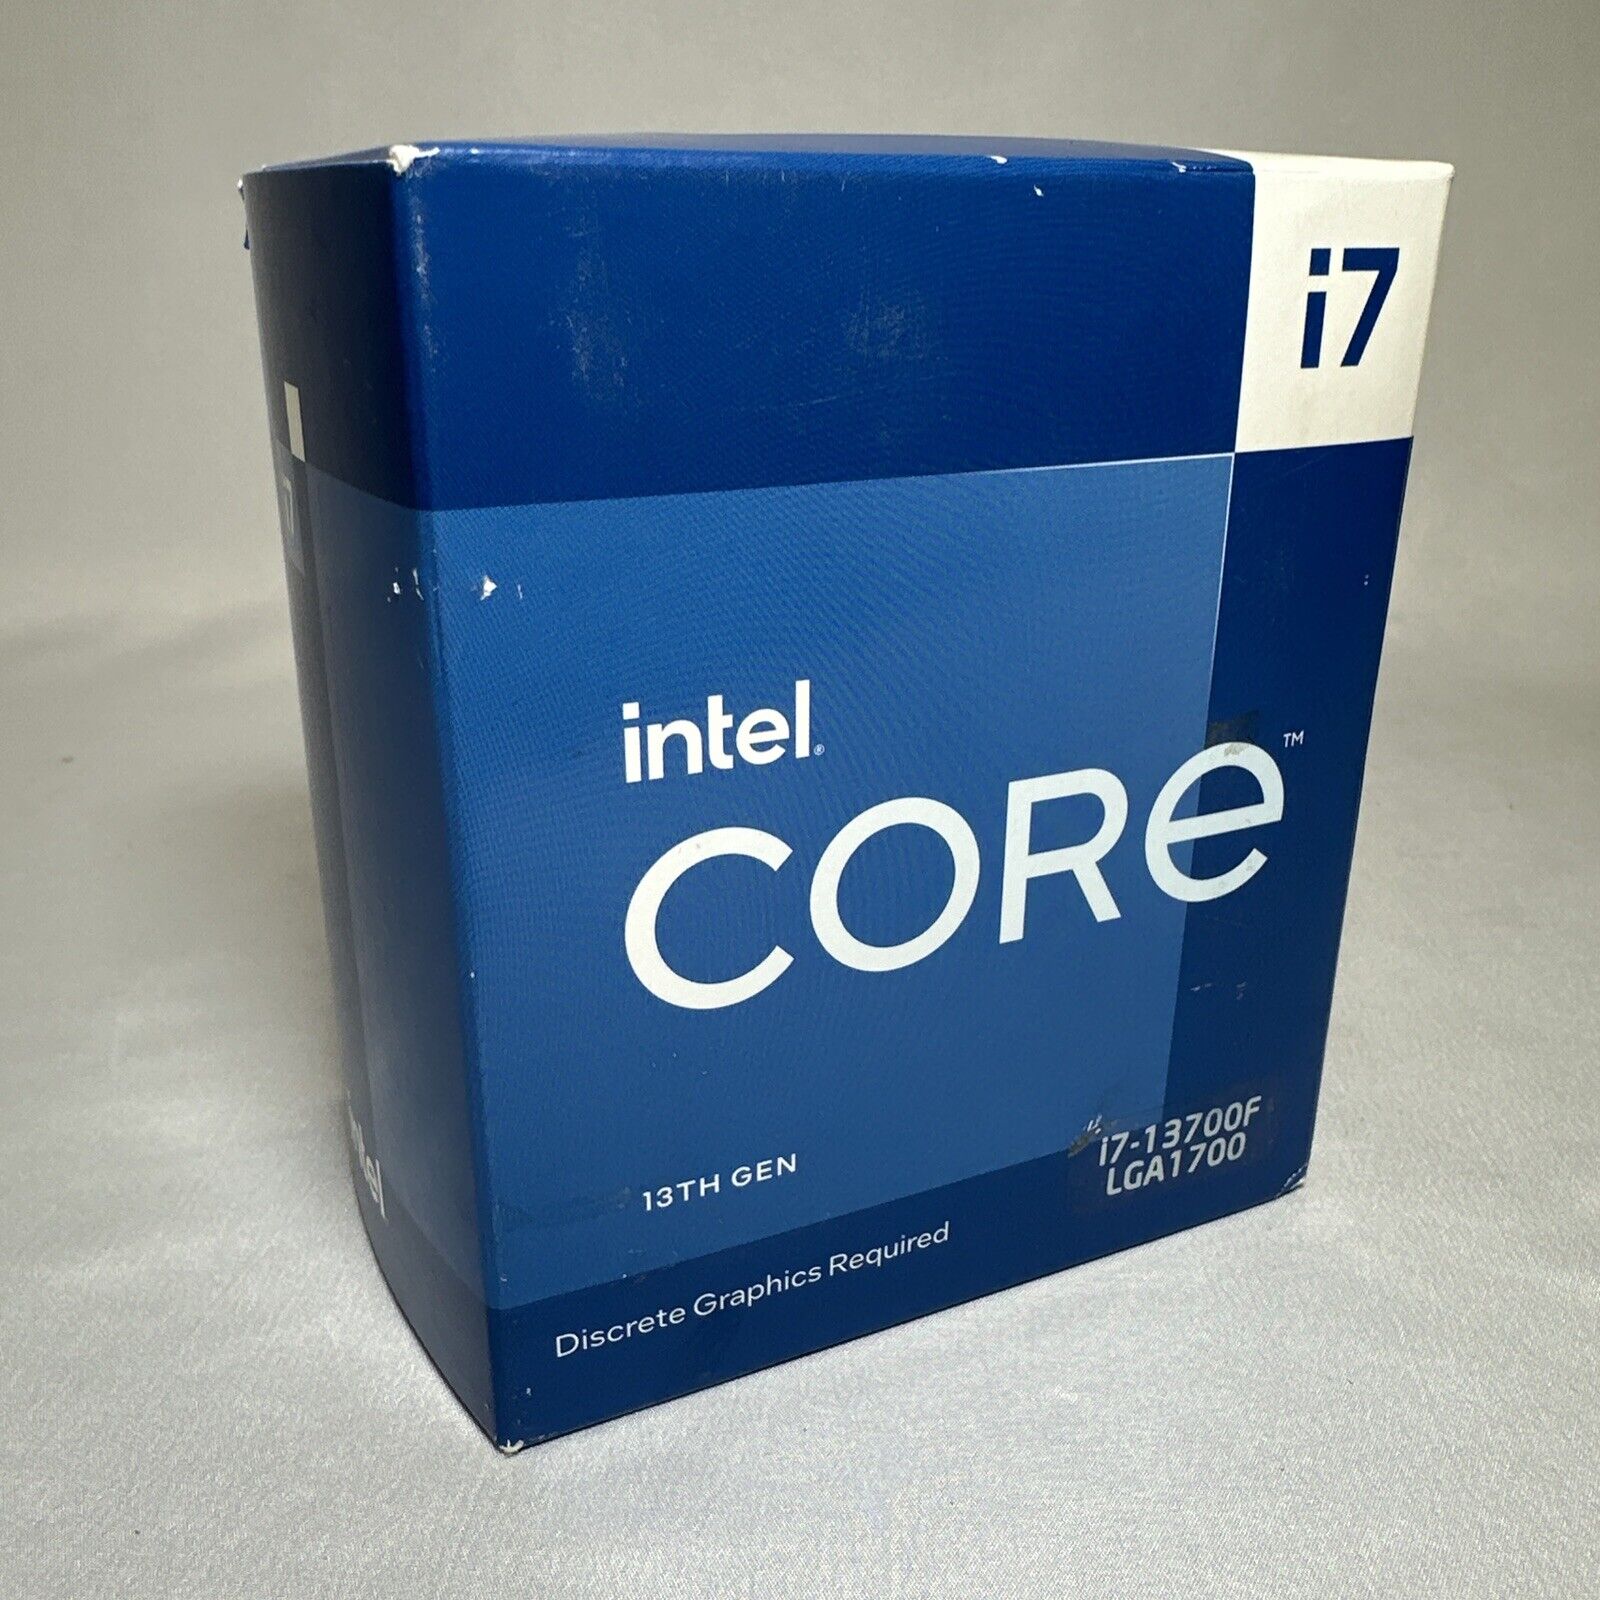 Intel Core i7-13700F Desktop Processor 16 cores (8 P-cores + 8 E-cores) - SEALED